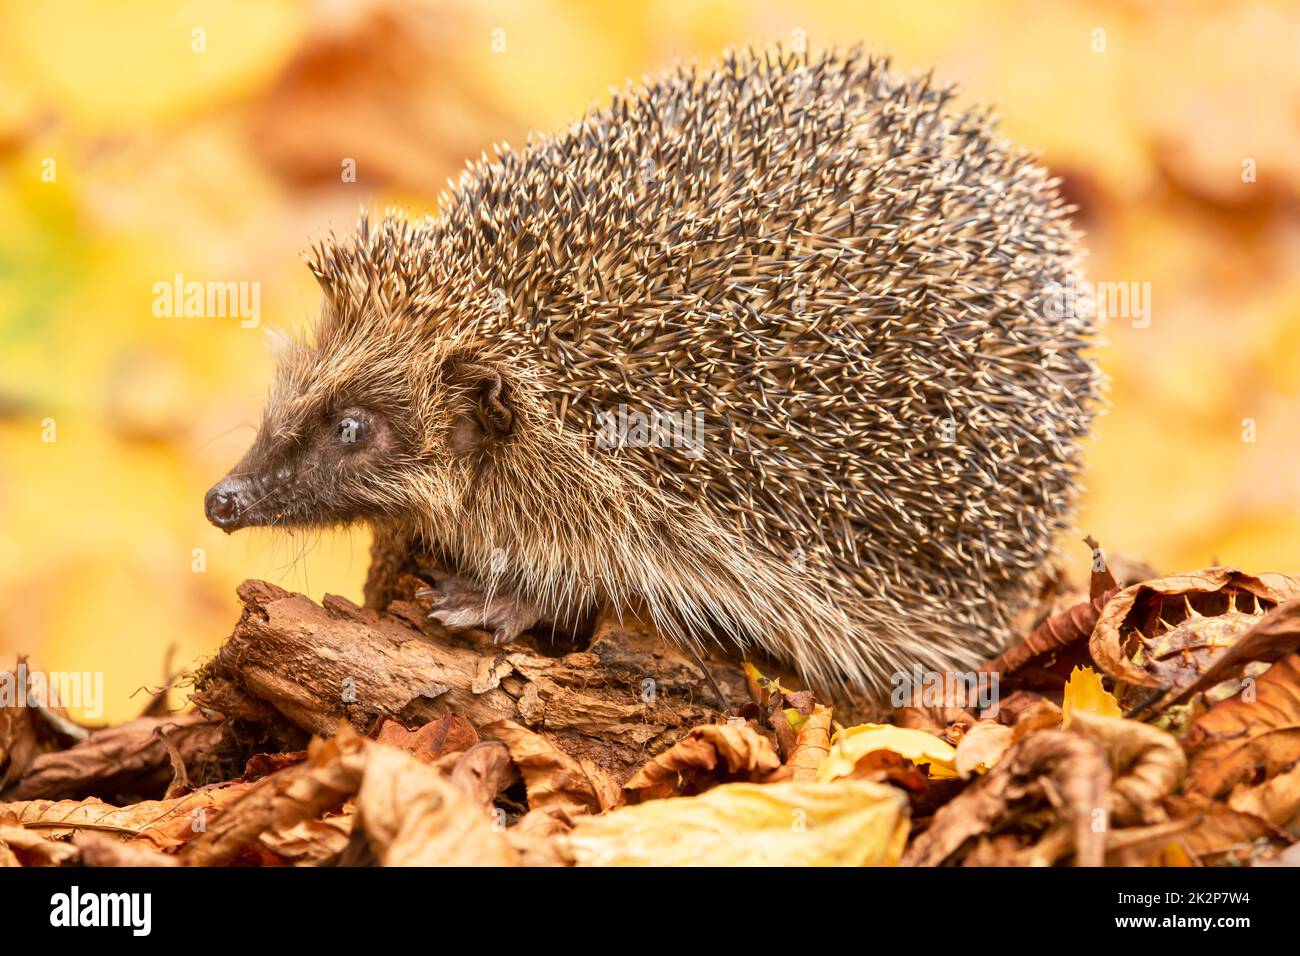 Hedgehog, Scientific name: Erinaceus Europaeus. Close-up of a wild, native, European hedgehog in Autumn foraging on a fallen log with colourful orange Stock Photo